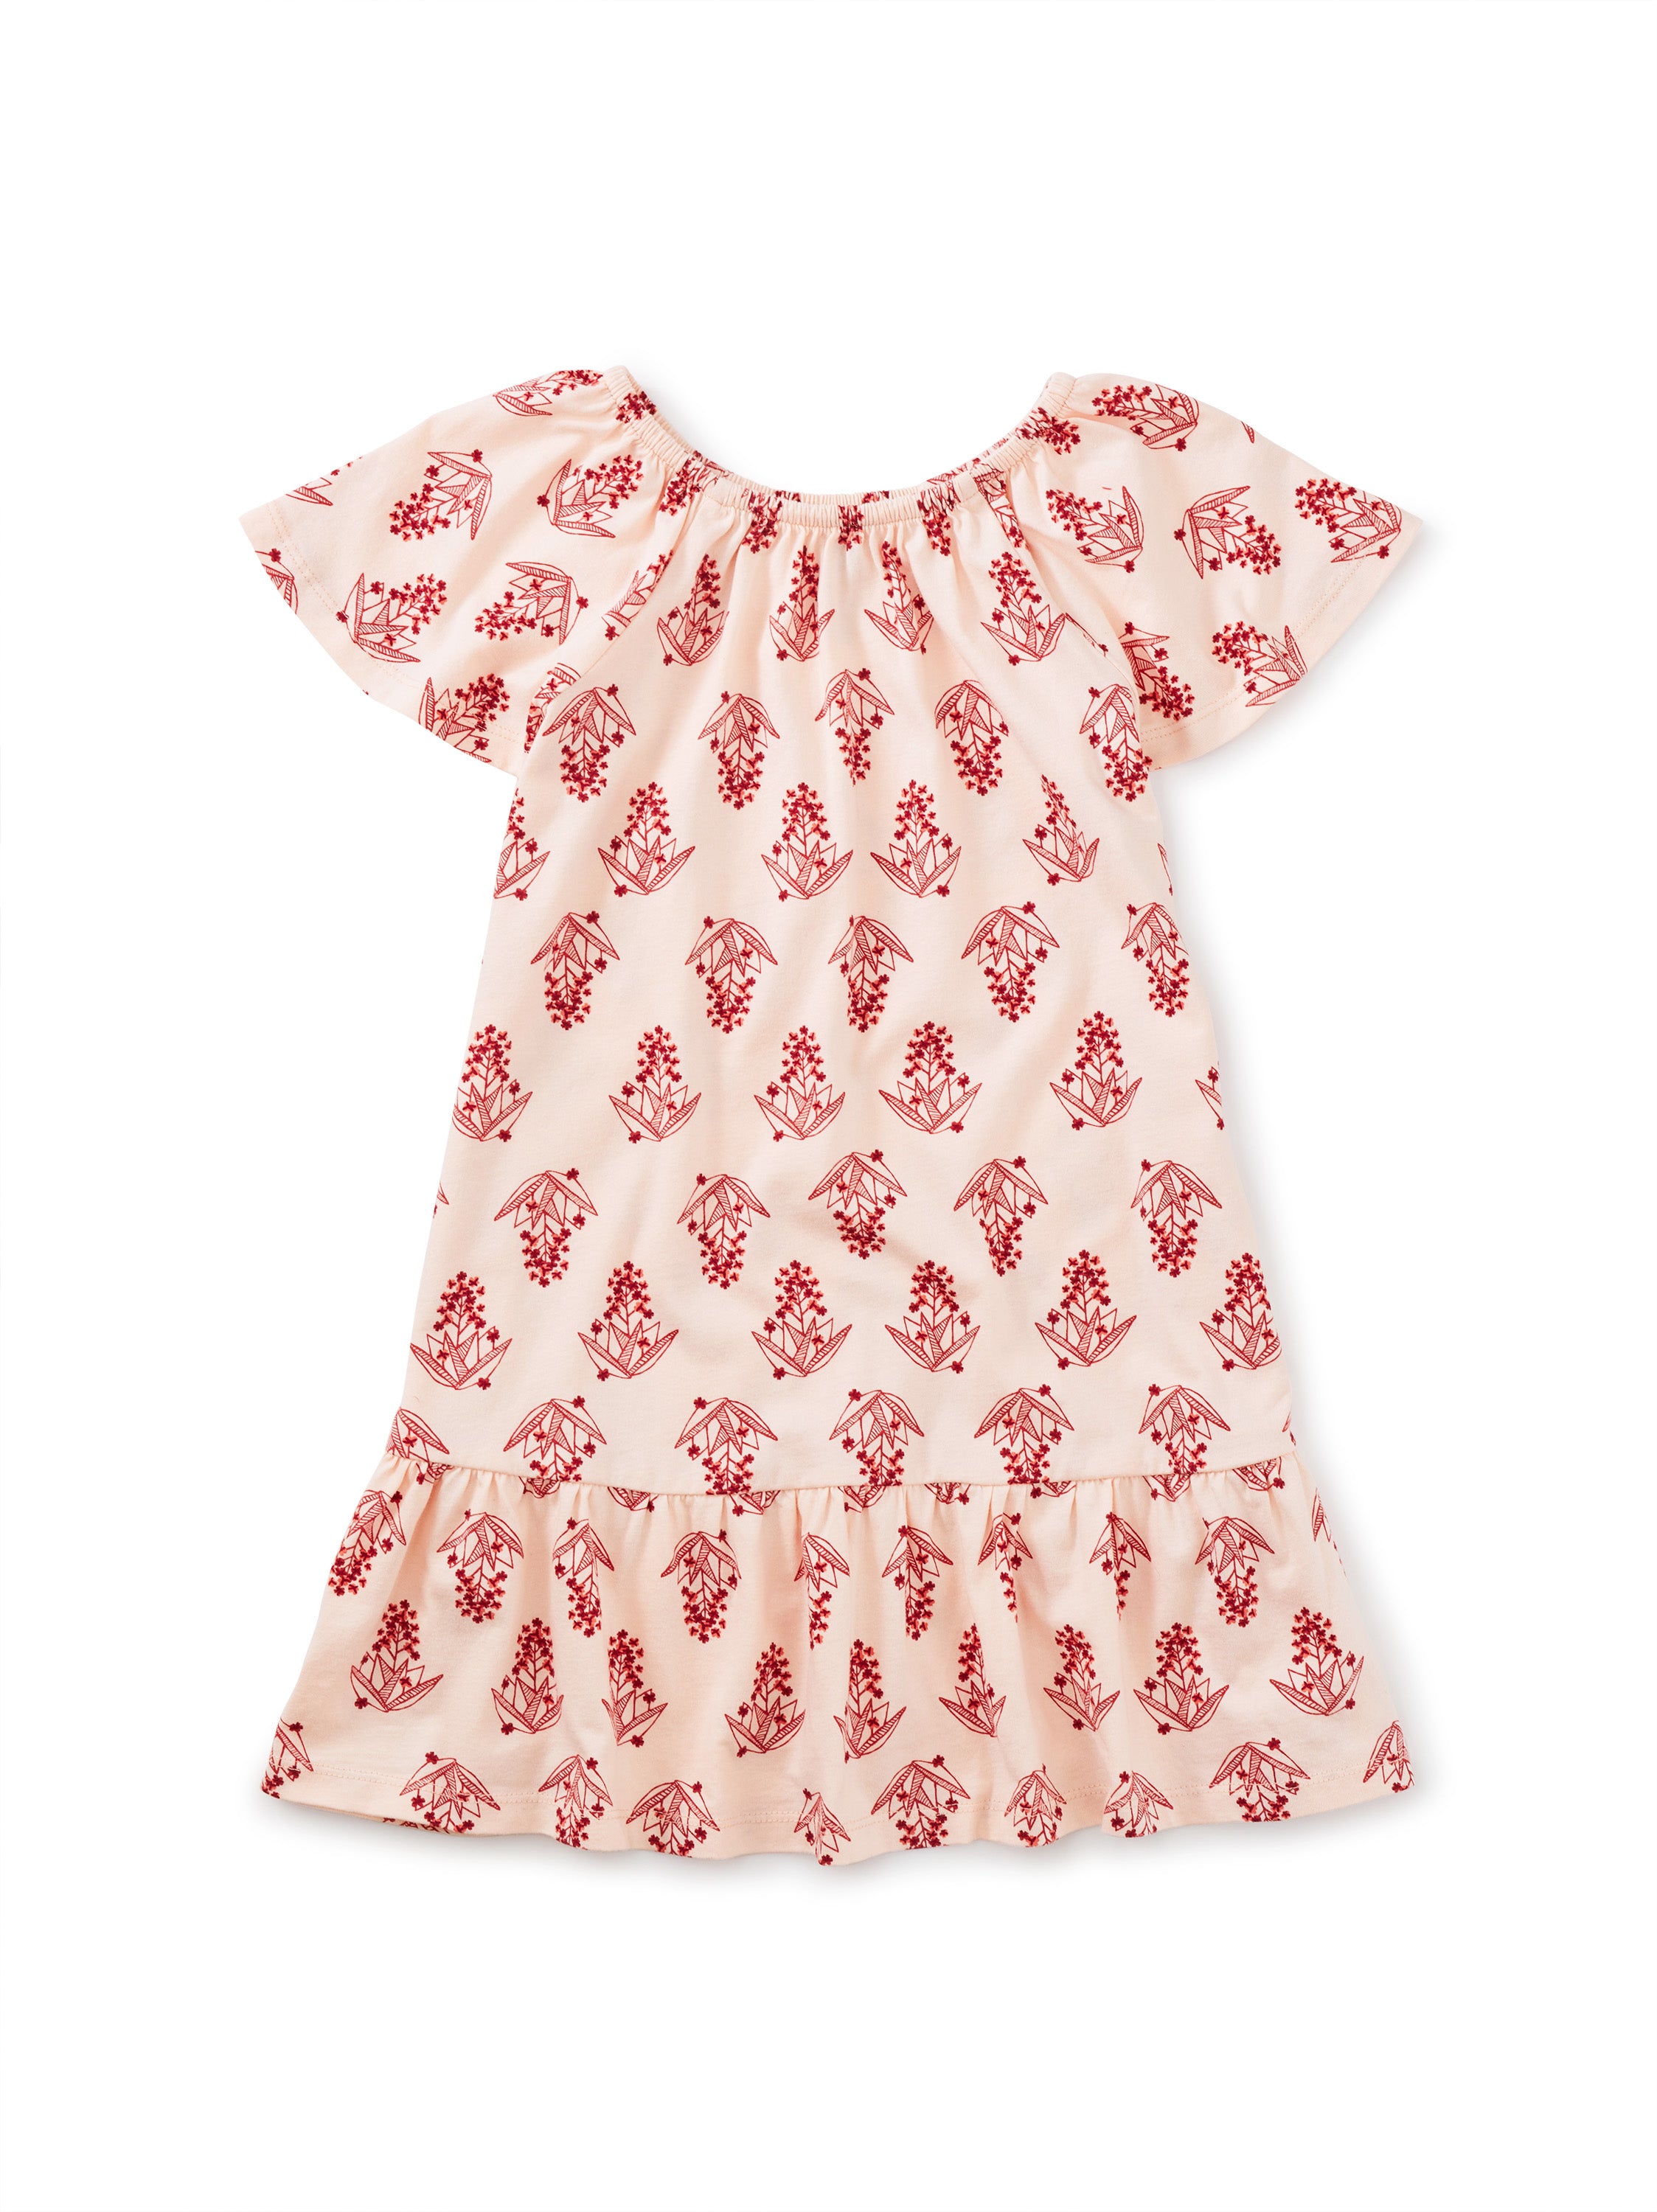 Agave Print Pink Twirl Drop Skirt Dress